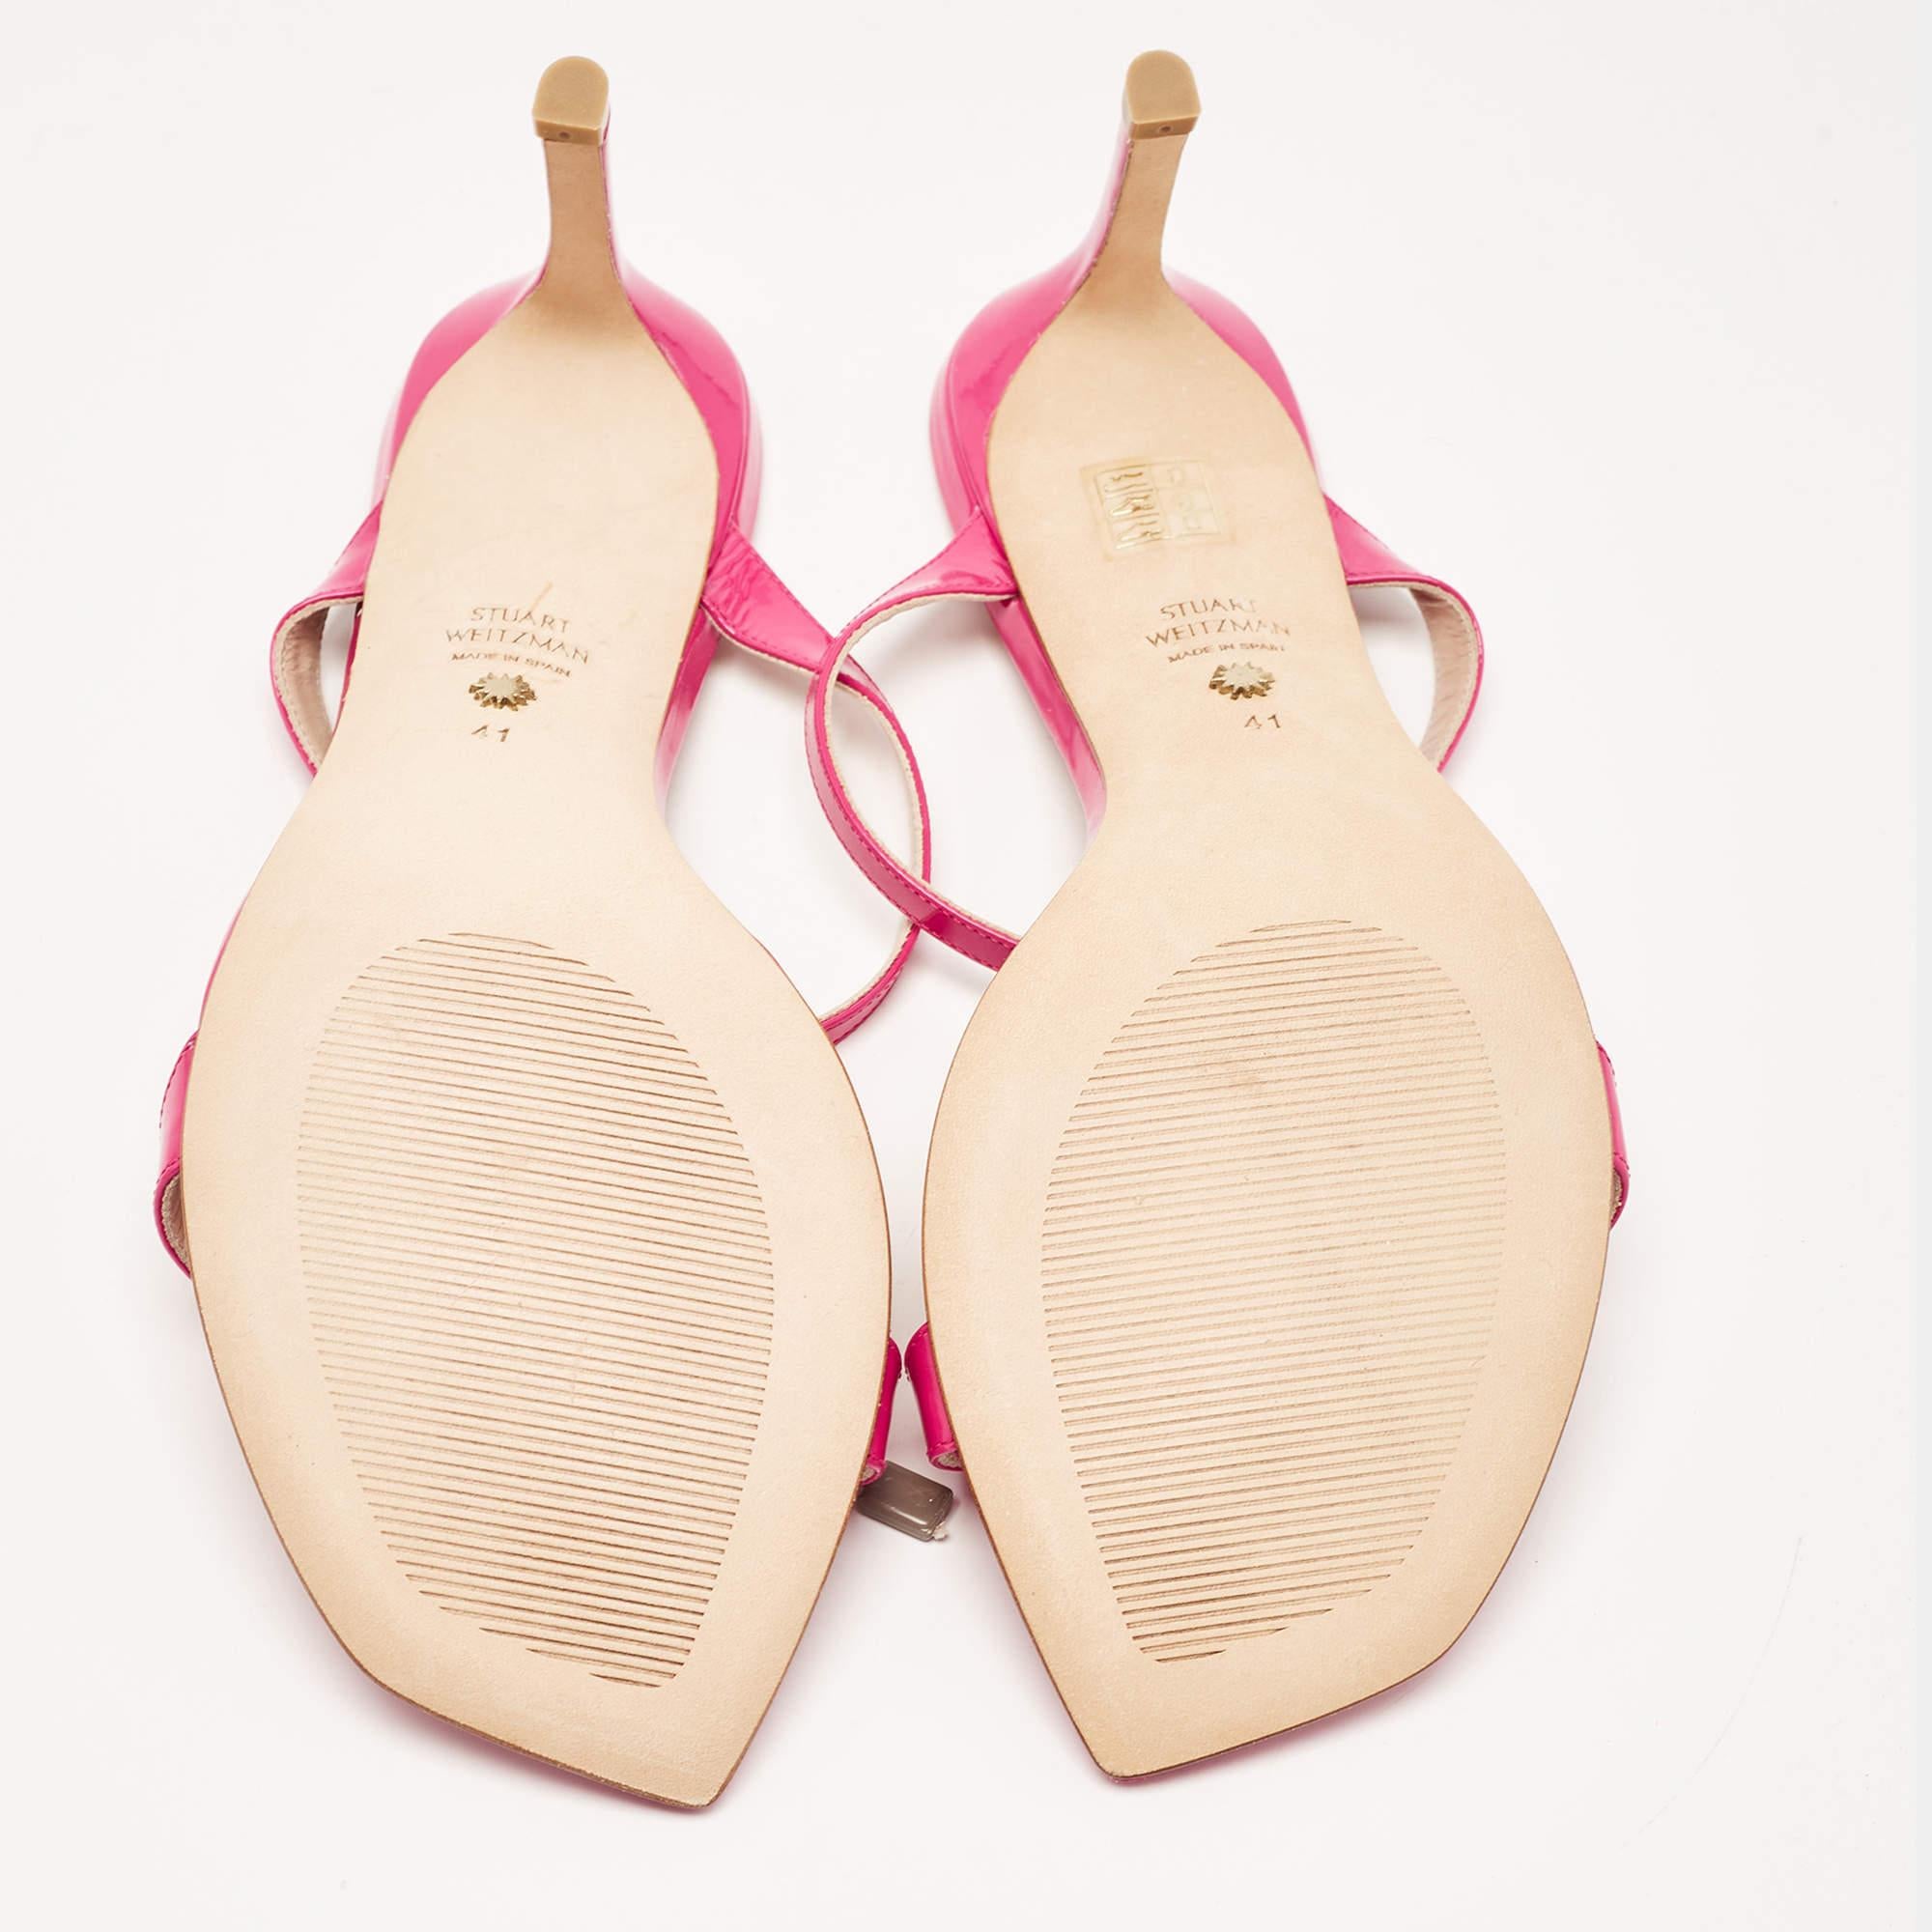 Stuart Weitzman Pink Patent Leather Slide Sandals Size 41 4